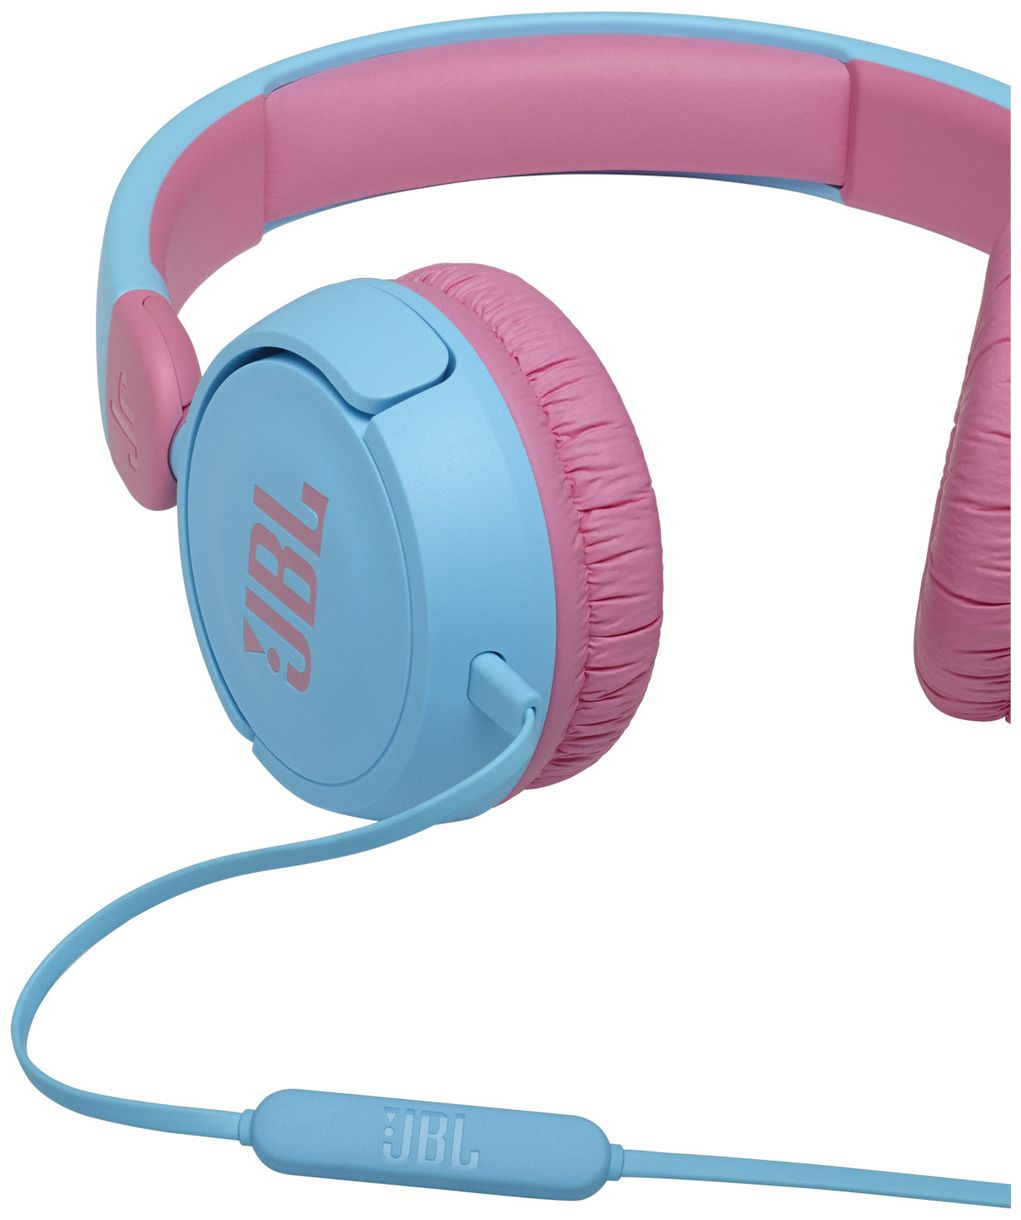 Jr310 Over Ear Kopfhörer Kabelgebunden (Blau) 